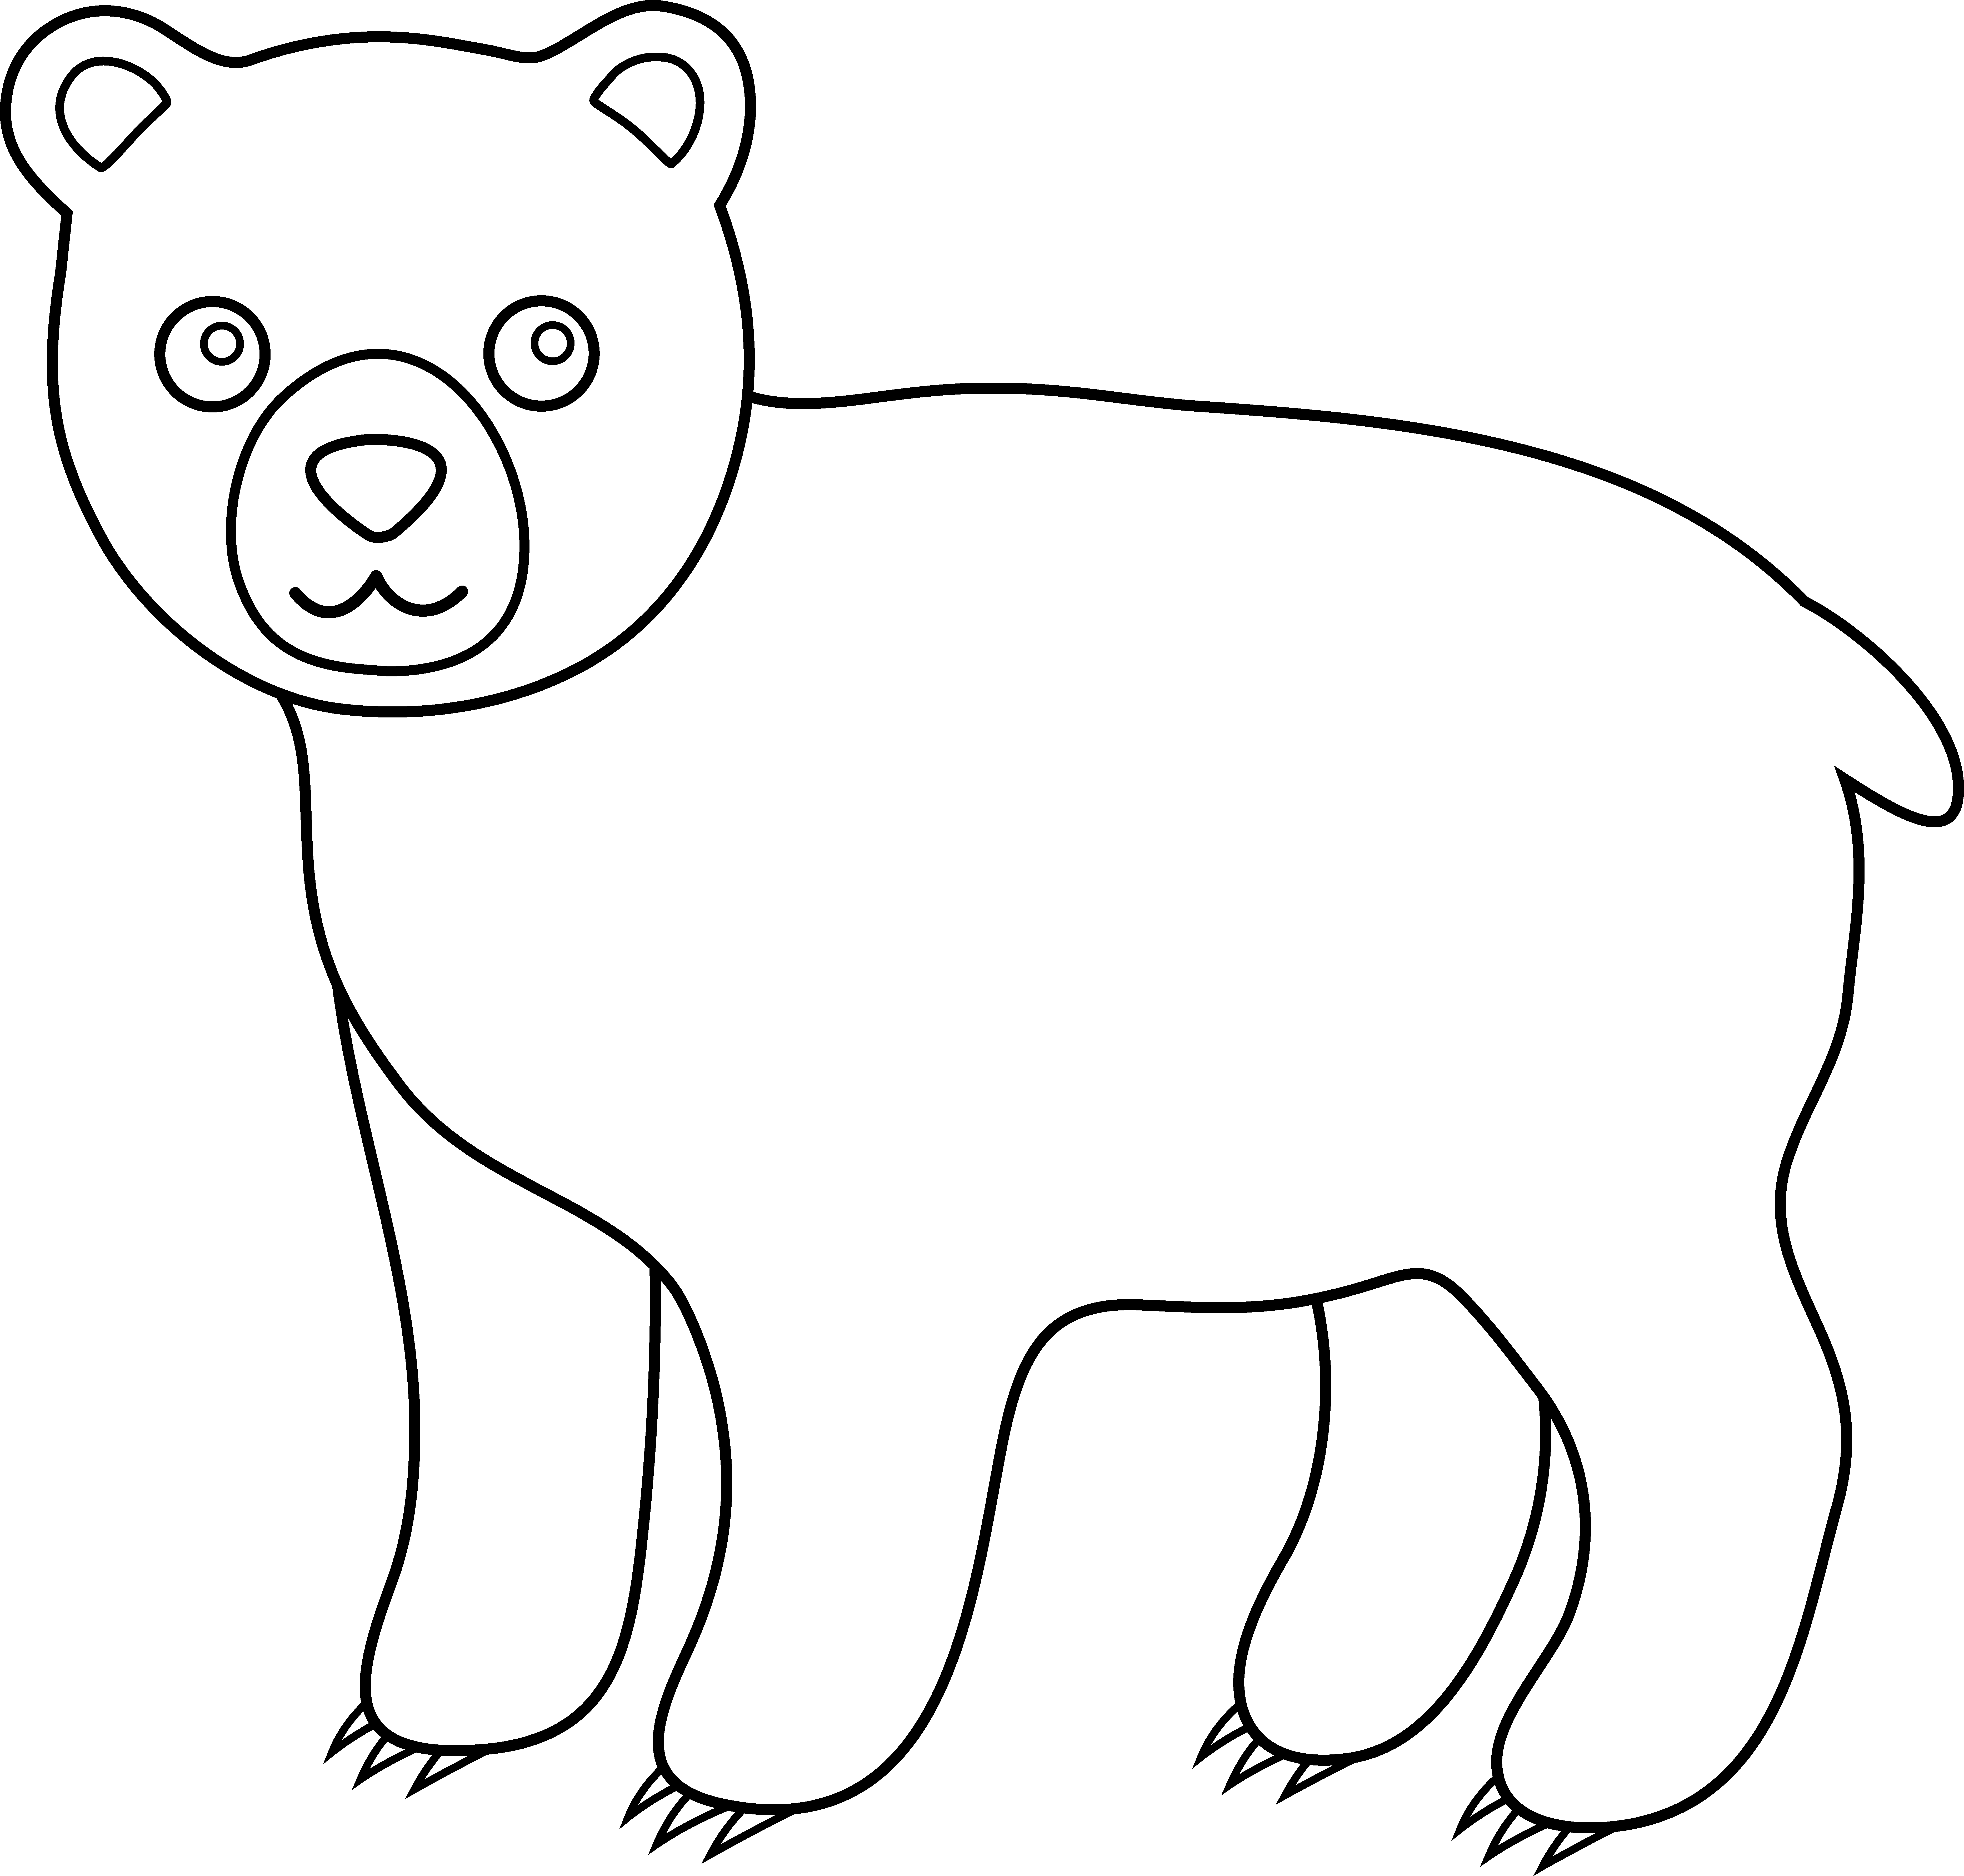 Cute animal bear clipart black and white